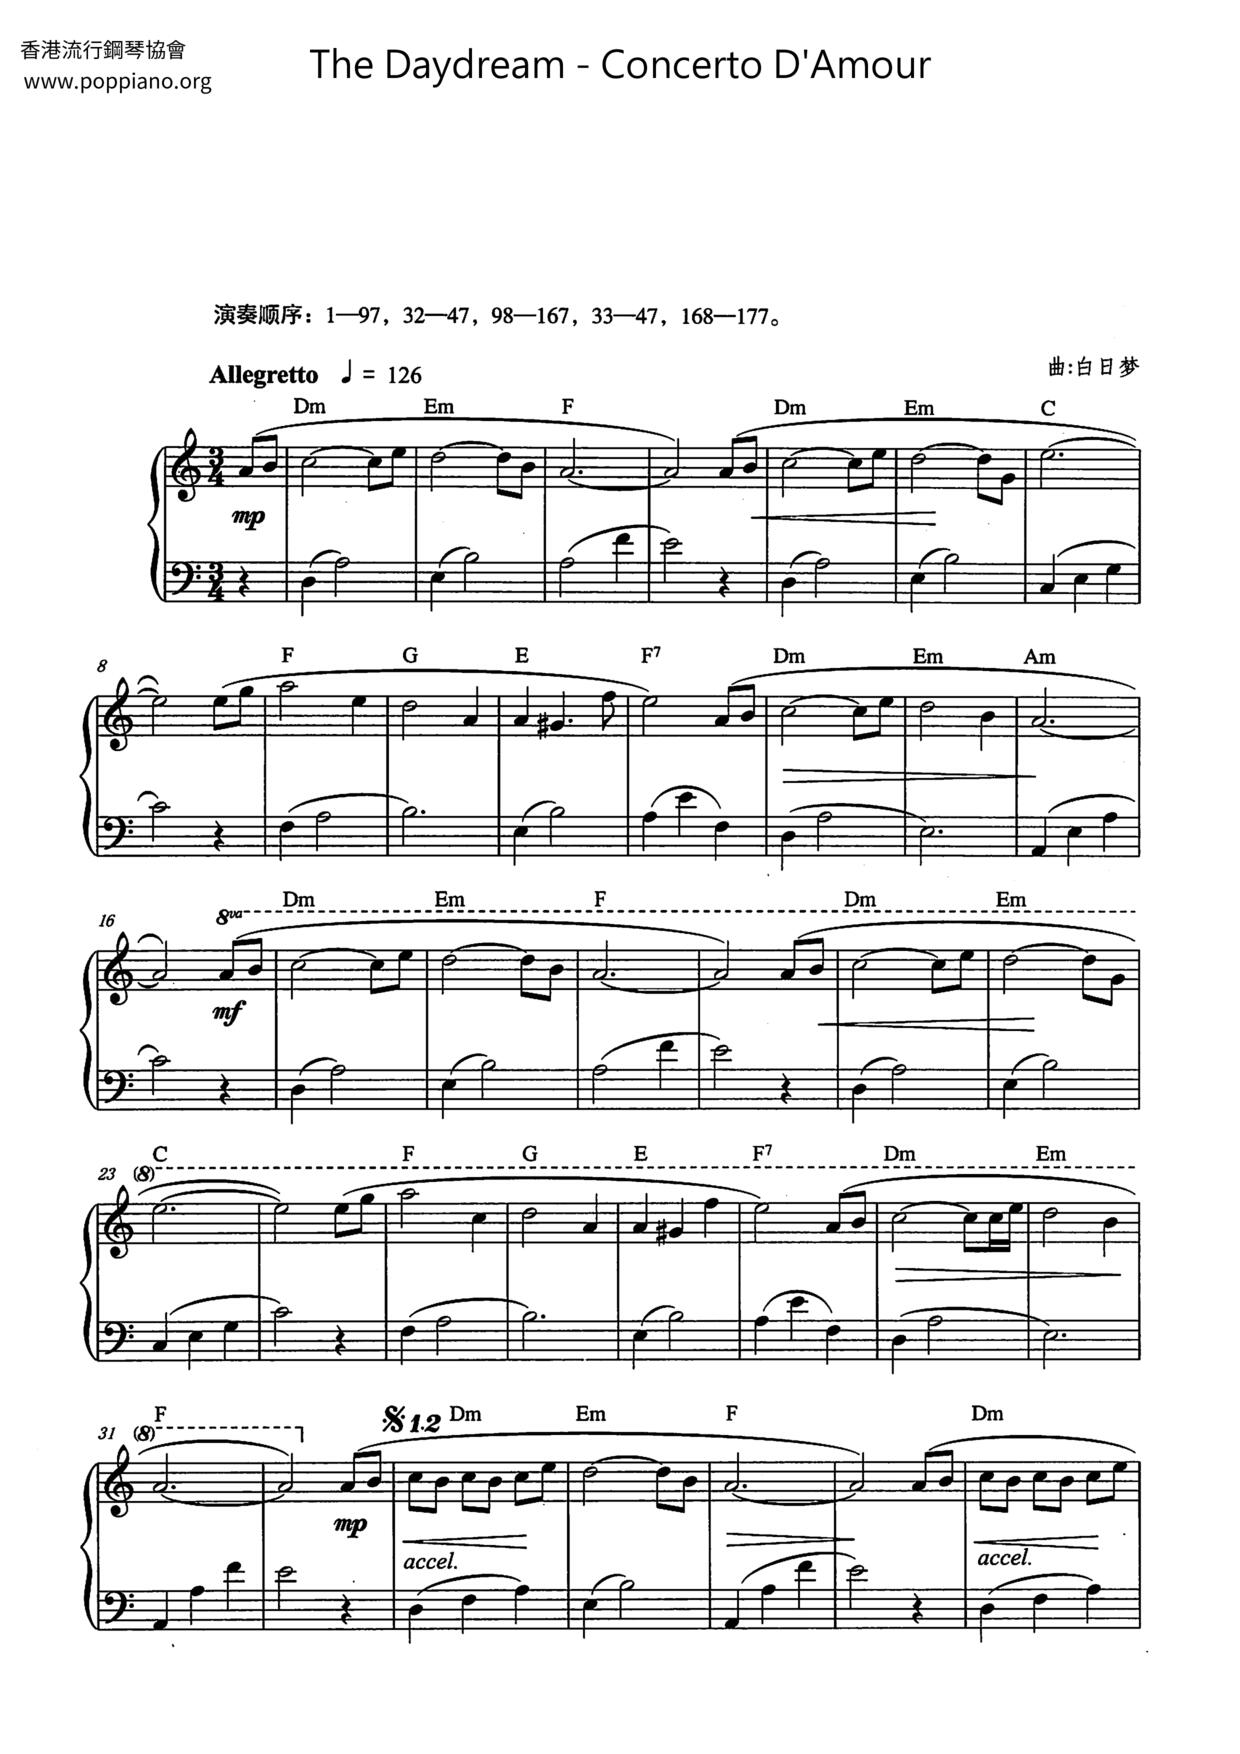 Concerto D'Amourピアノ譜